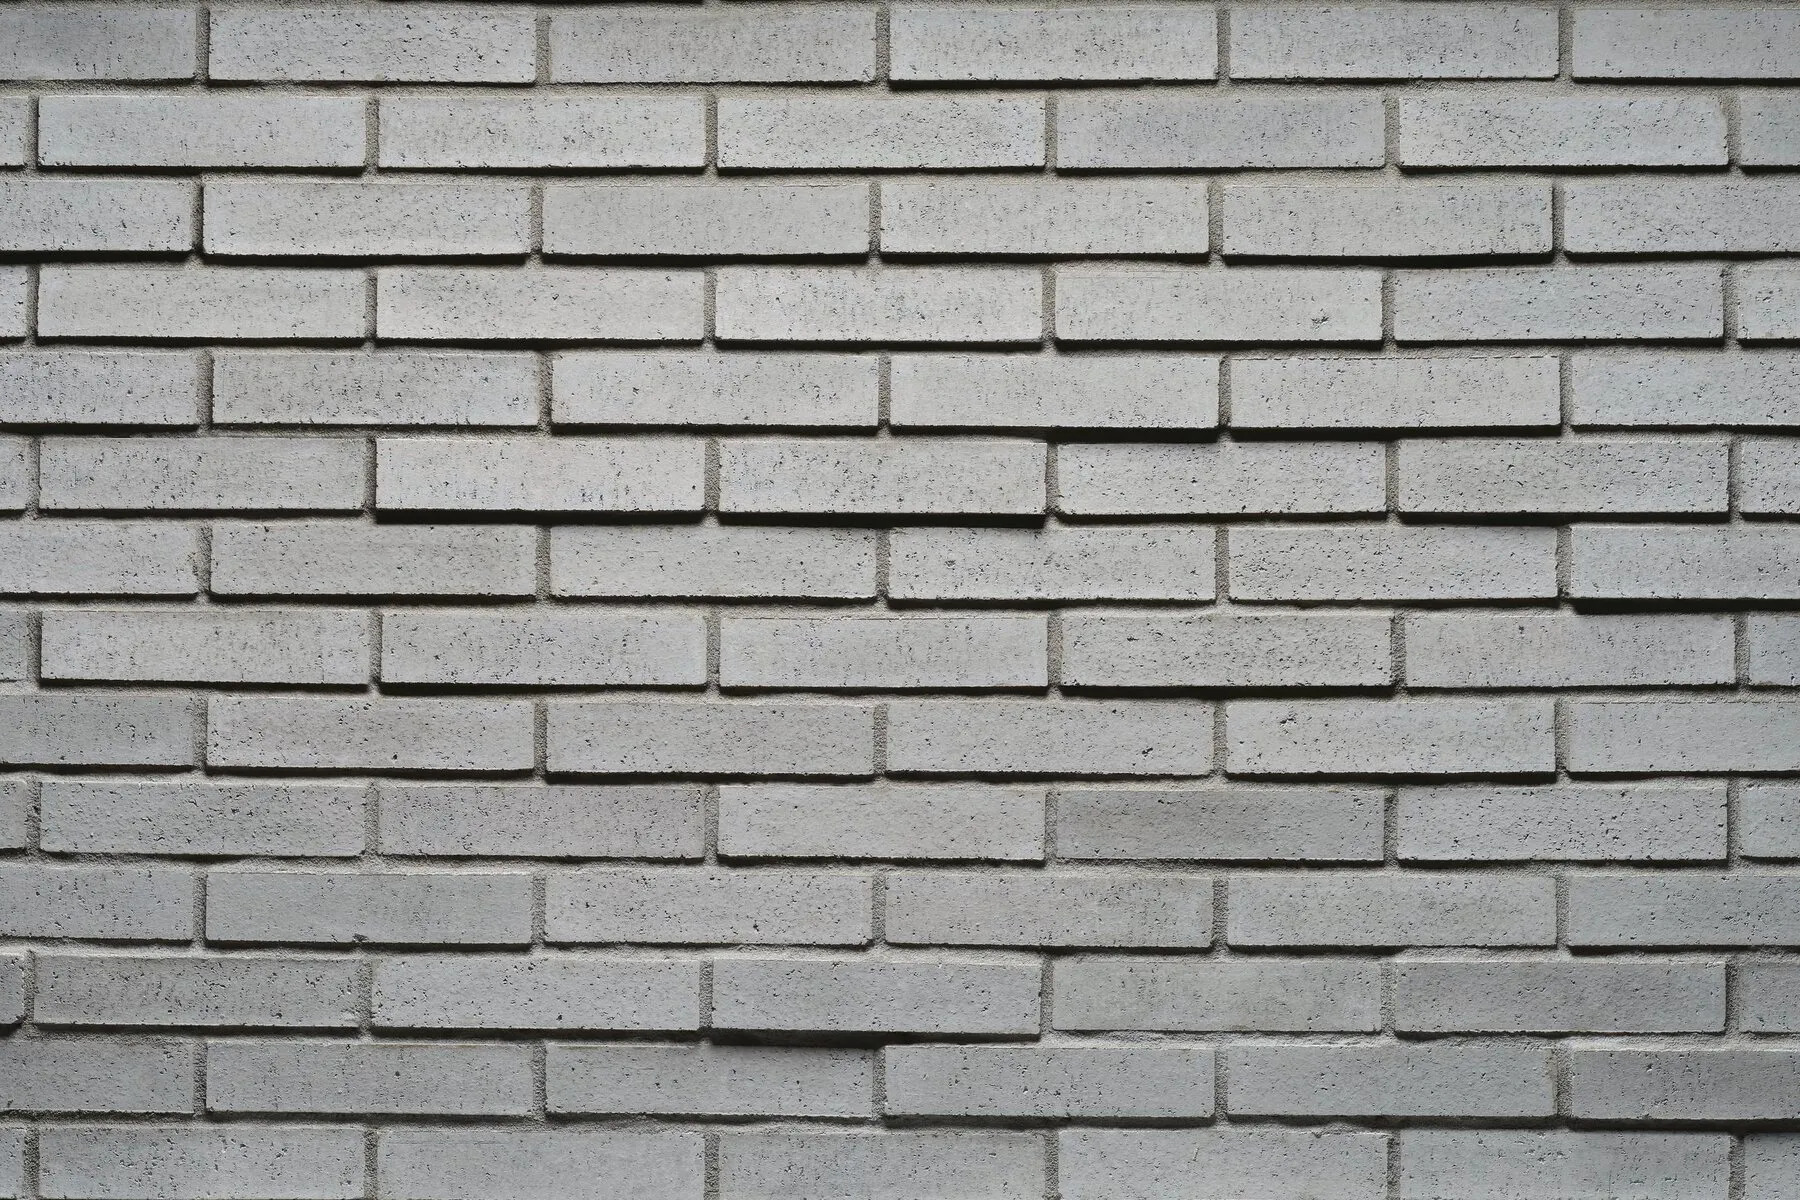 Tenley Brick - Cultured Brick